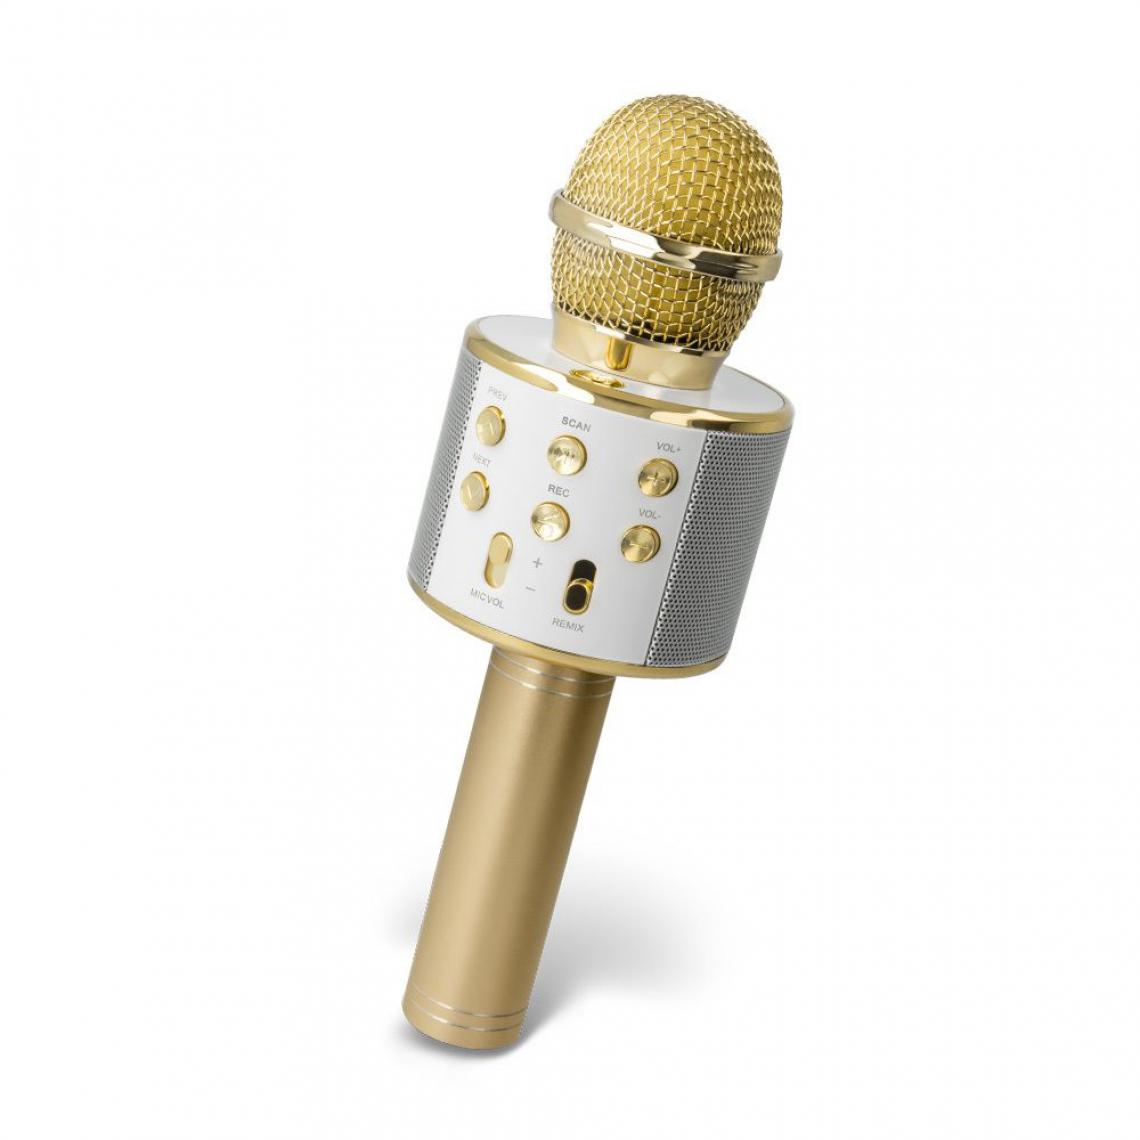 Ozzzo - Microphone Karaoke bluetooth haut parleur ozzzo Gold Or pour Samsung Galaxy M01s - Autres accessoires smartphone